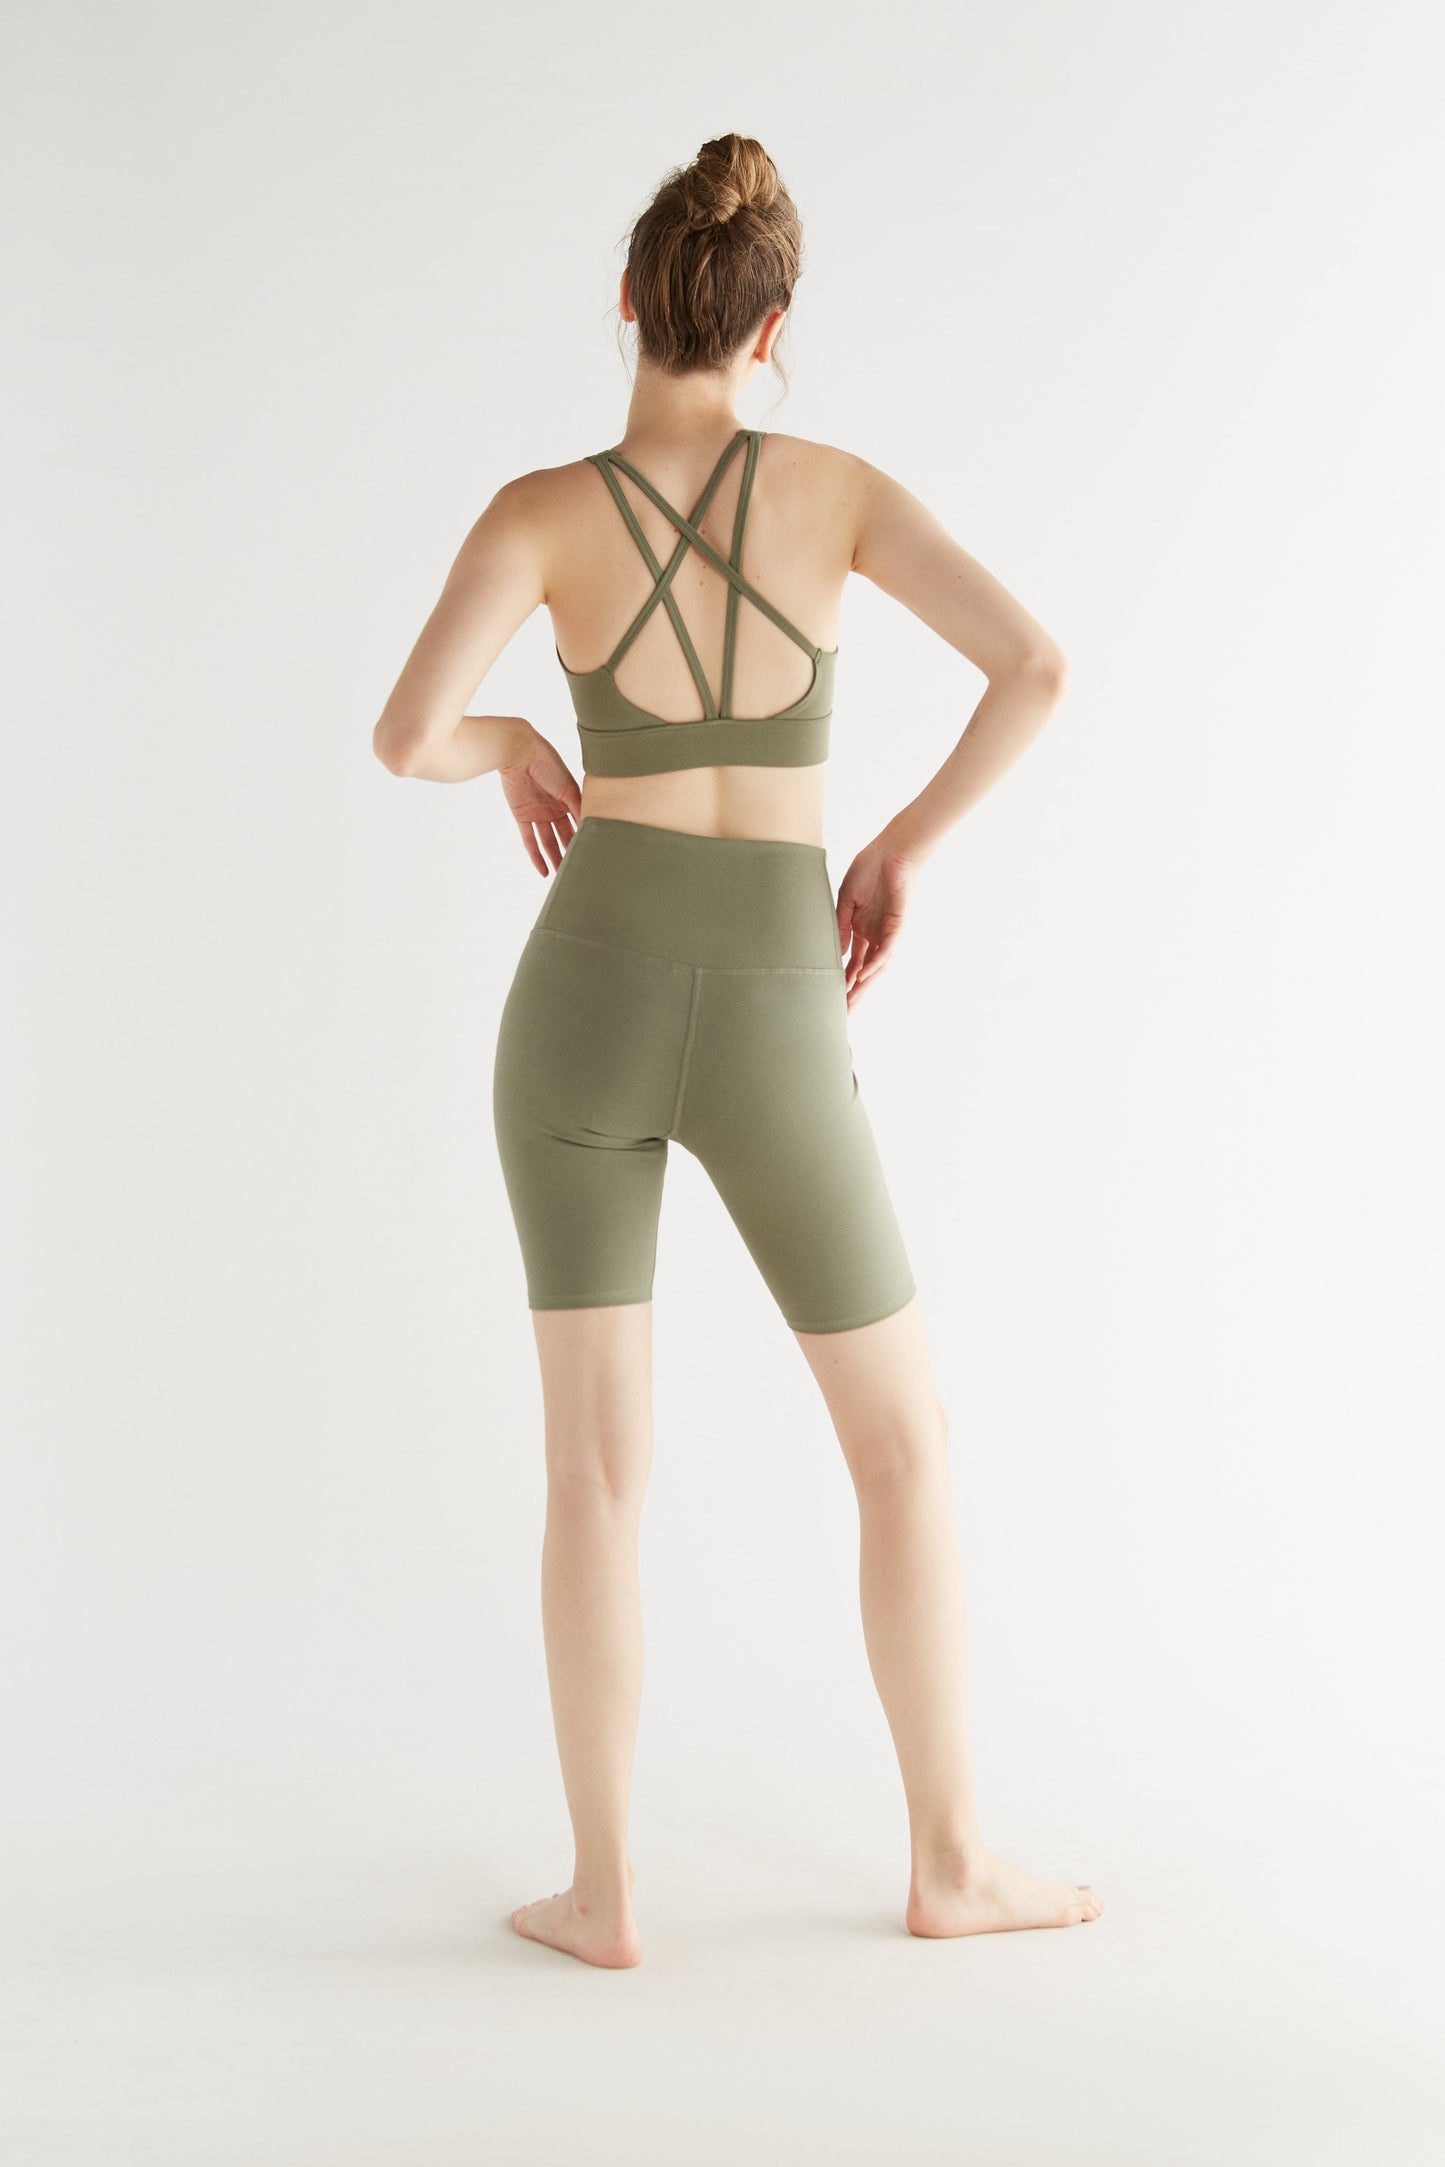 T1202-05 | Damen Yoga Top recyclet - Light Green